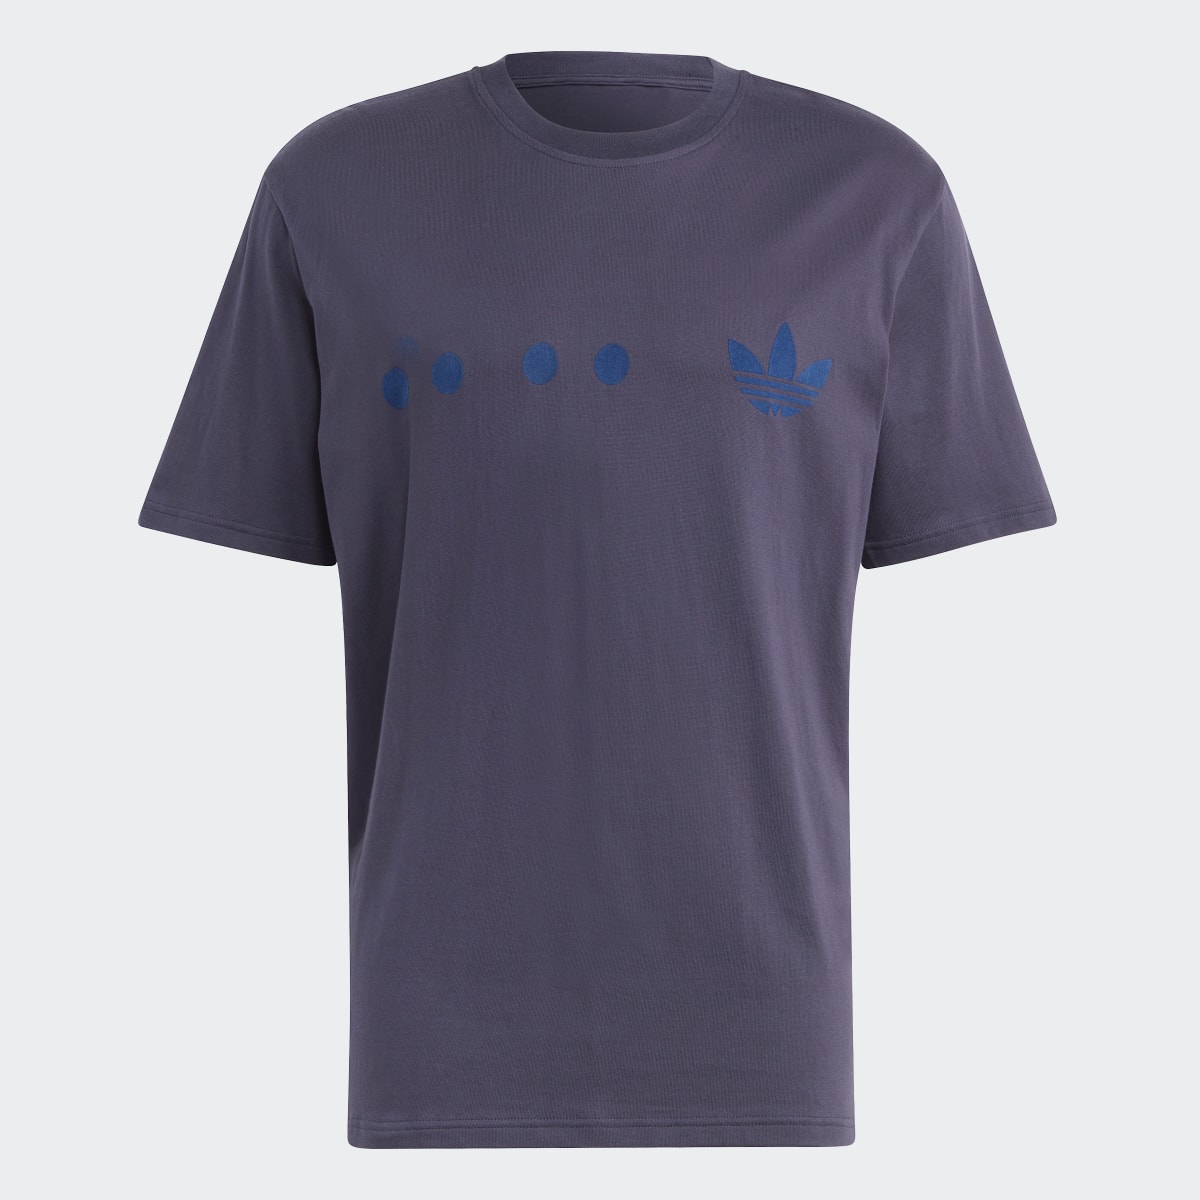 Adidas RIFTA City Boy Graphic T-Shirt. 6